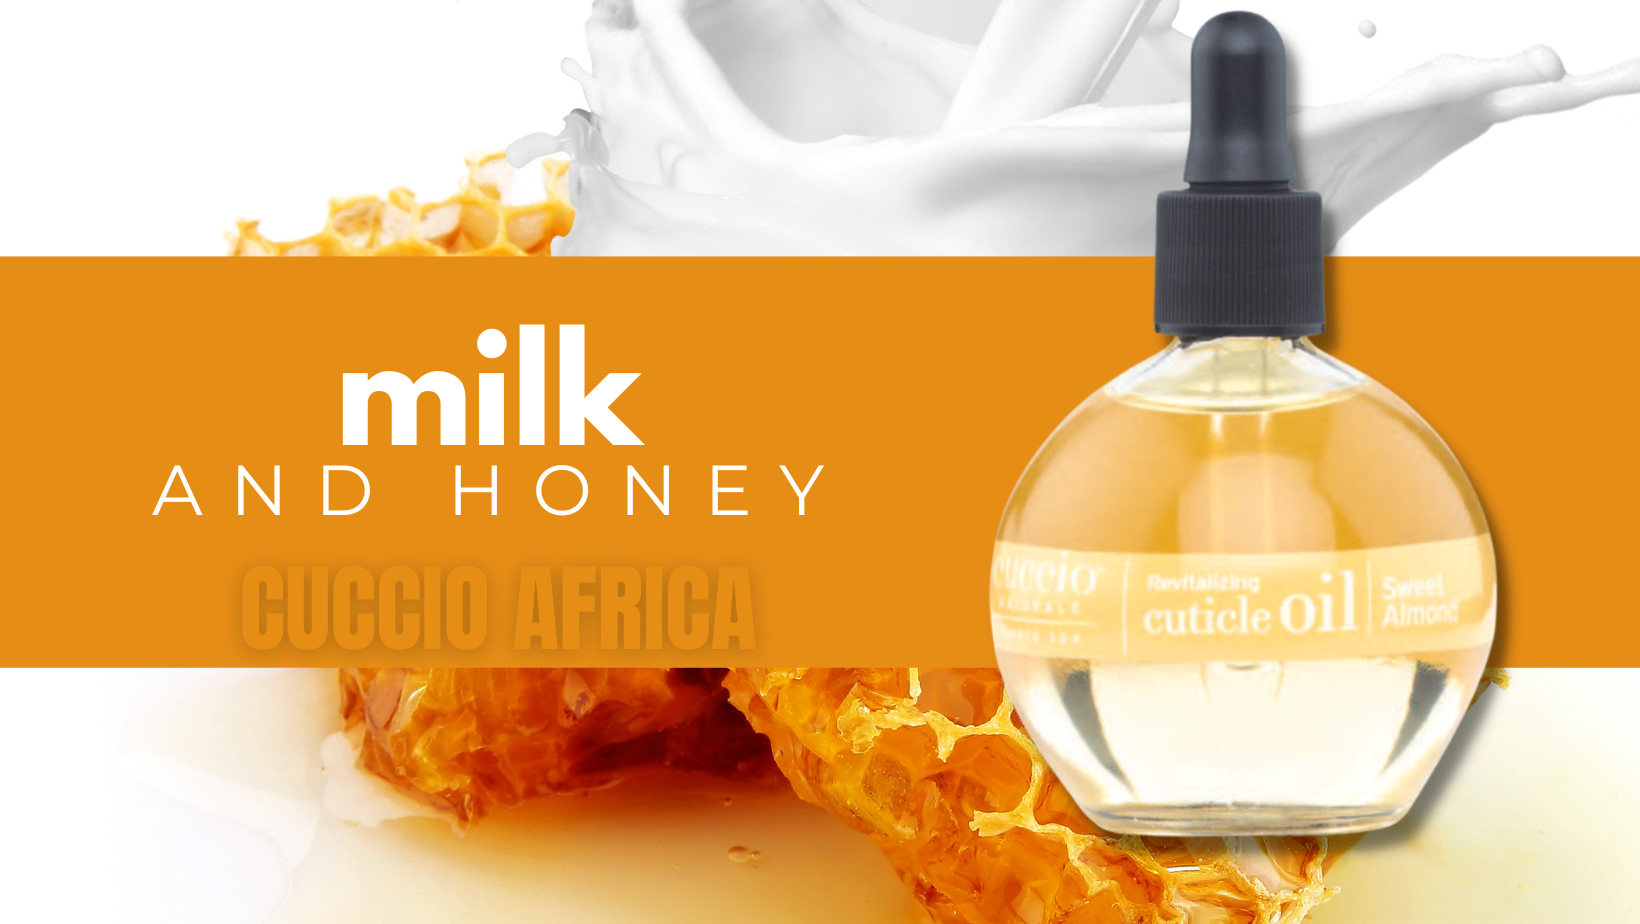 Milk and Honey Cuticle Oil